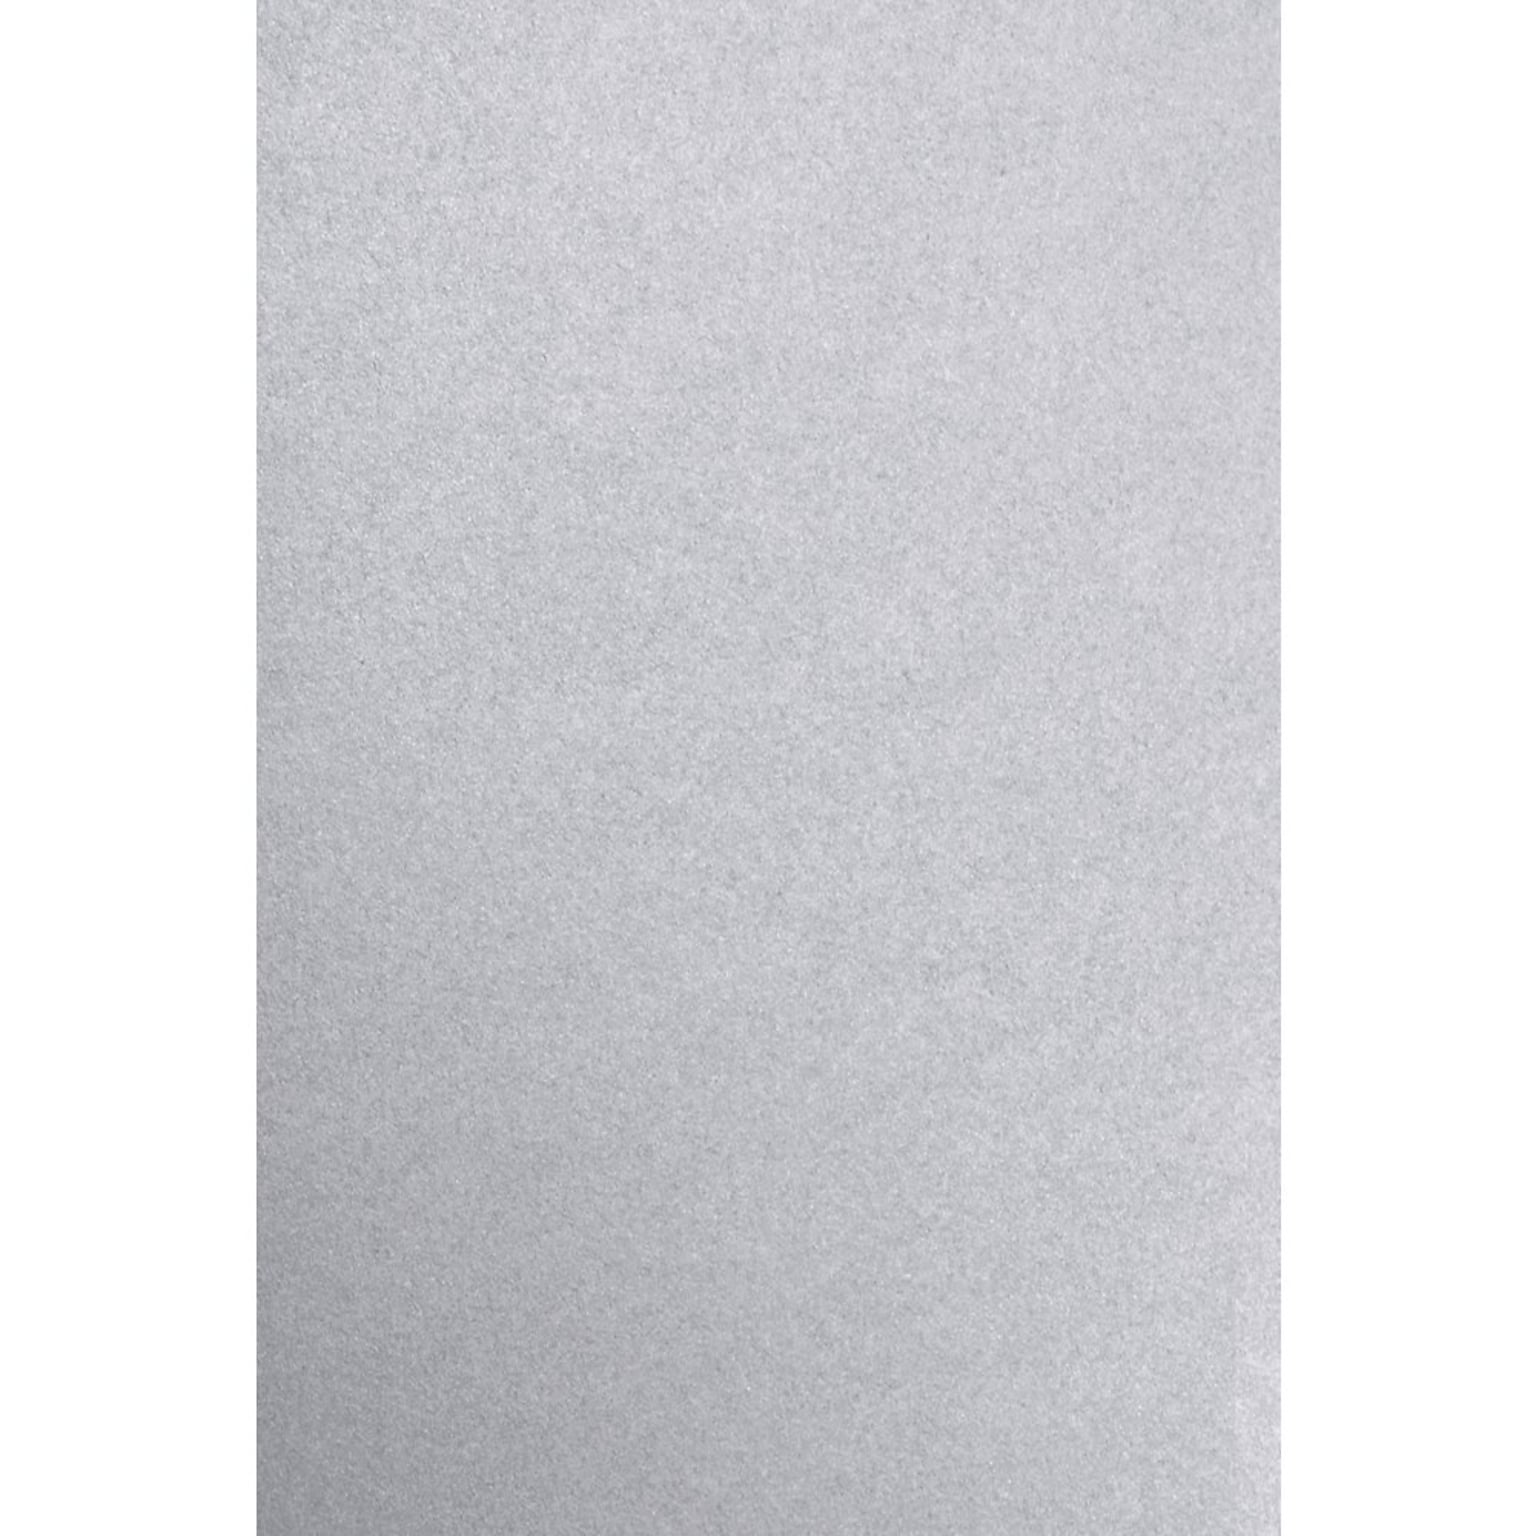 JAM PAPER 12 x 18 Multipurpose Paper, Silver Metallic, 50/Pack (1218-P-M06-50)